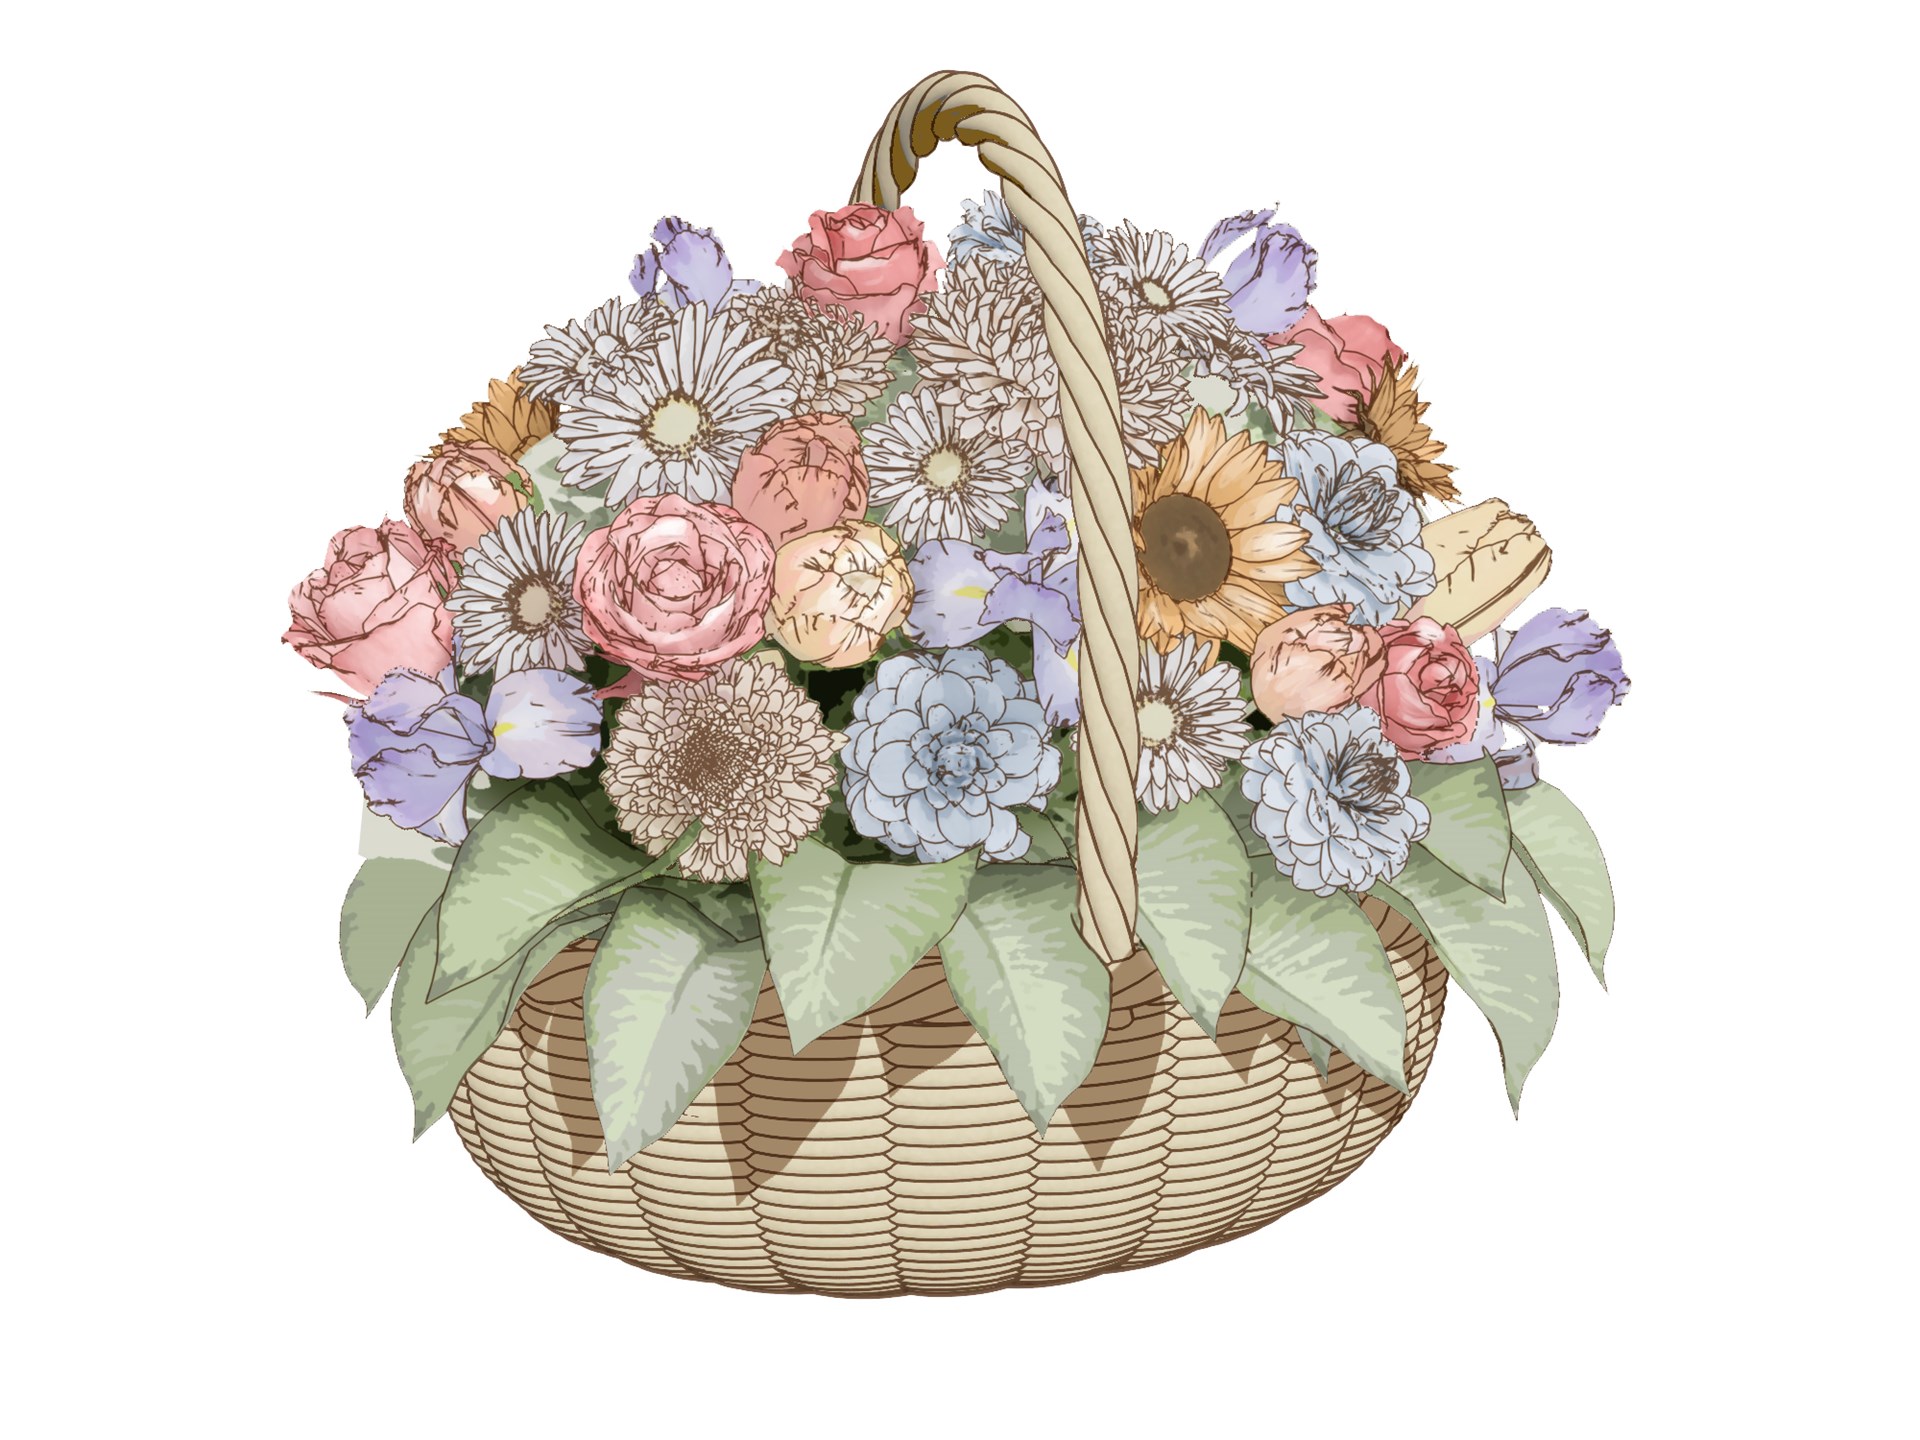 product image for Basket arrangement of flowers